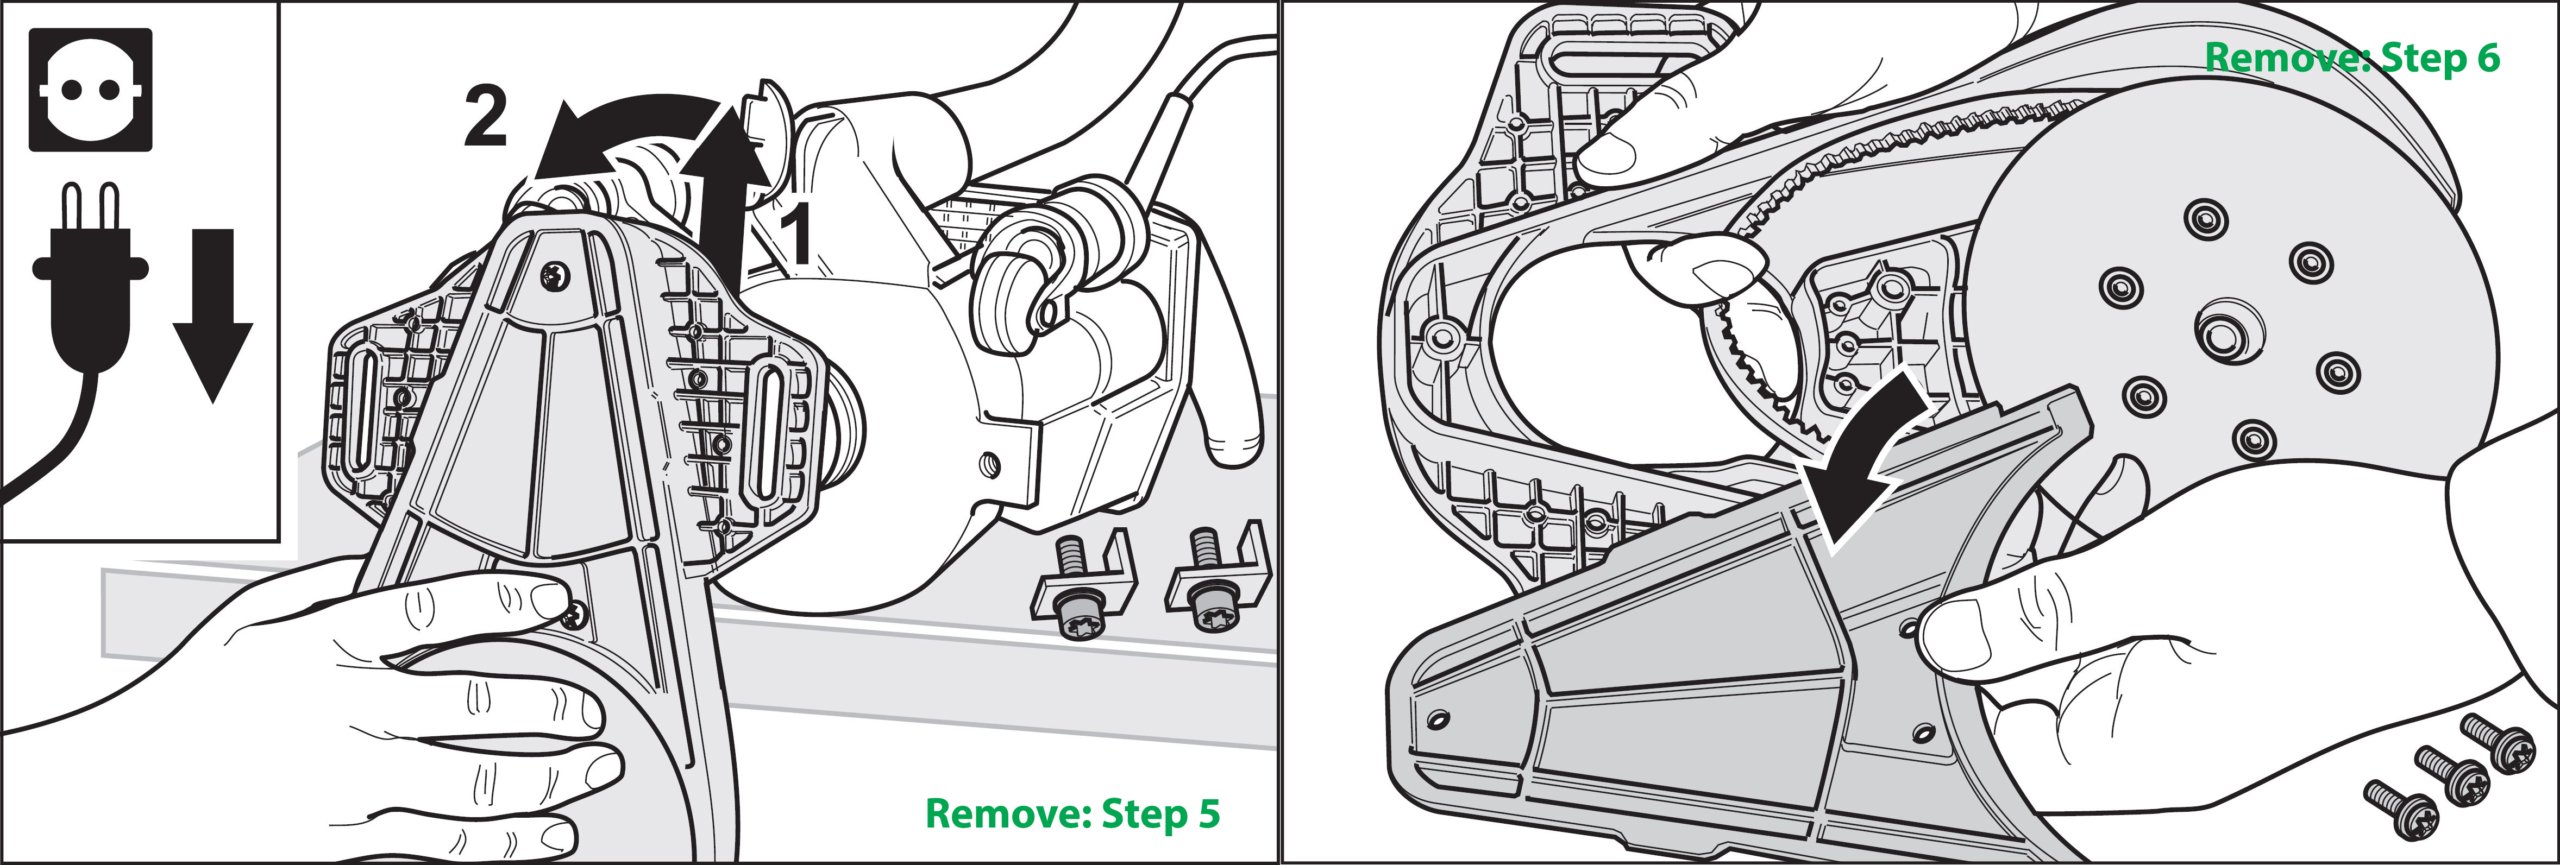 How to Remove the Lagler FLIP V-Belt